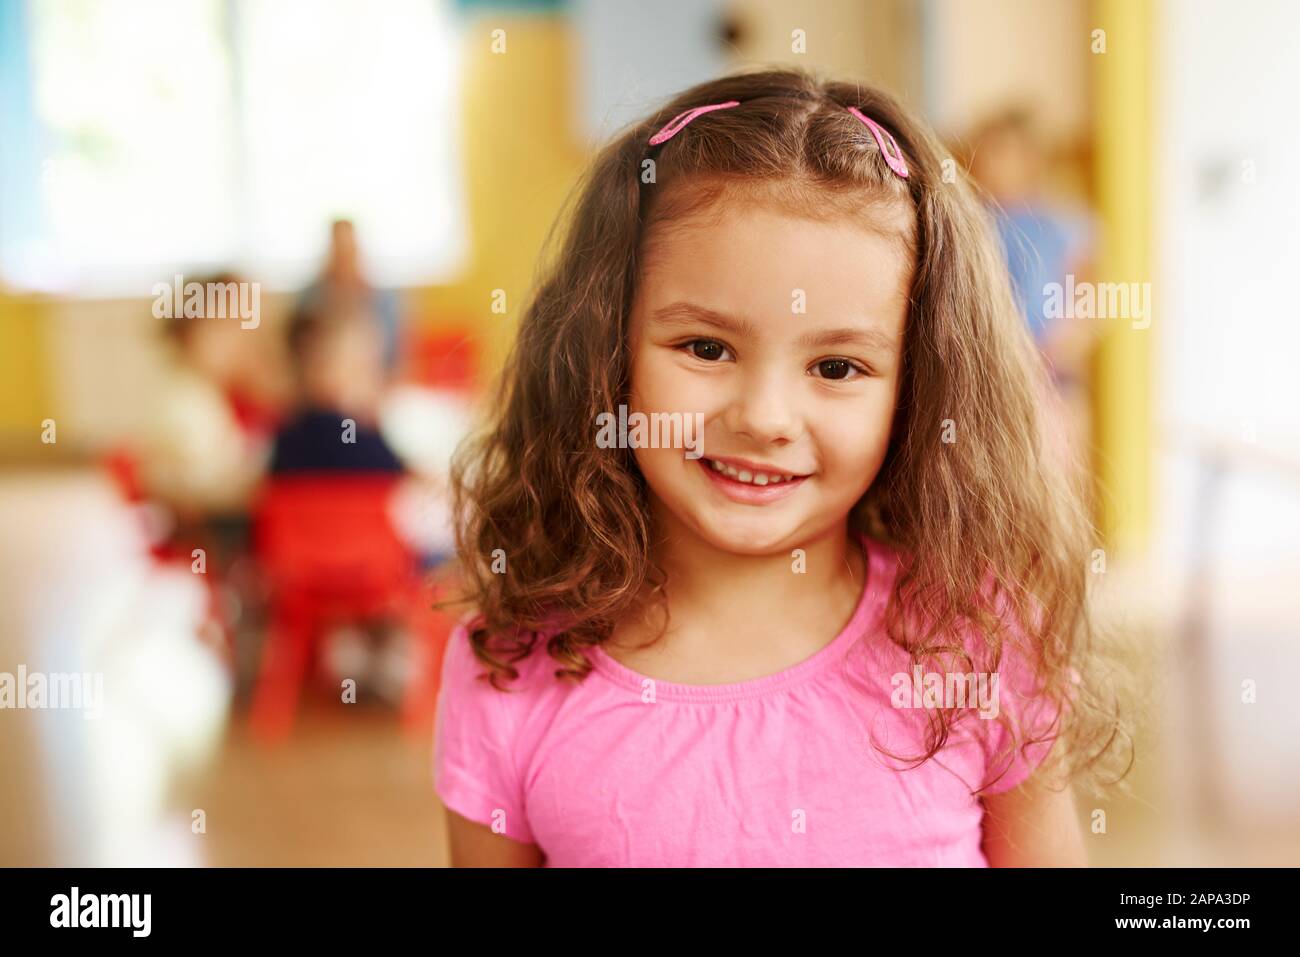 Portrait of smiling preschool girl Stock Photo